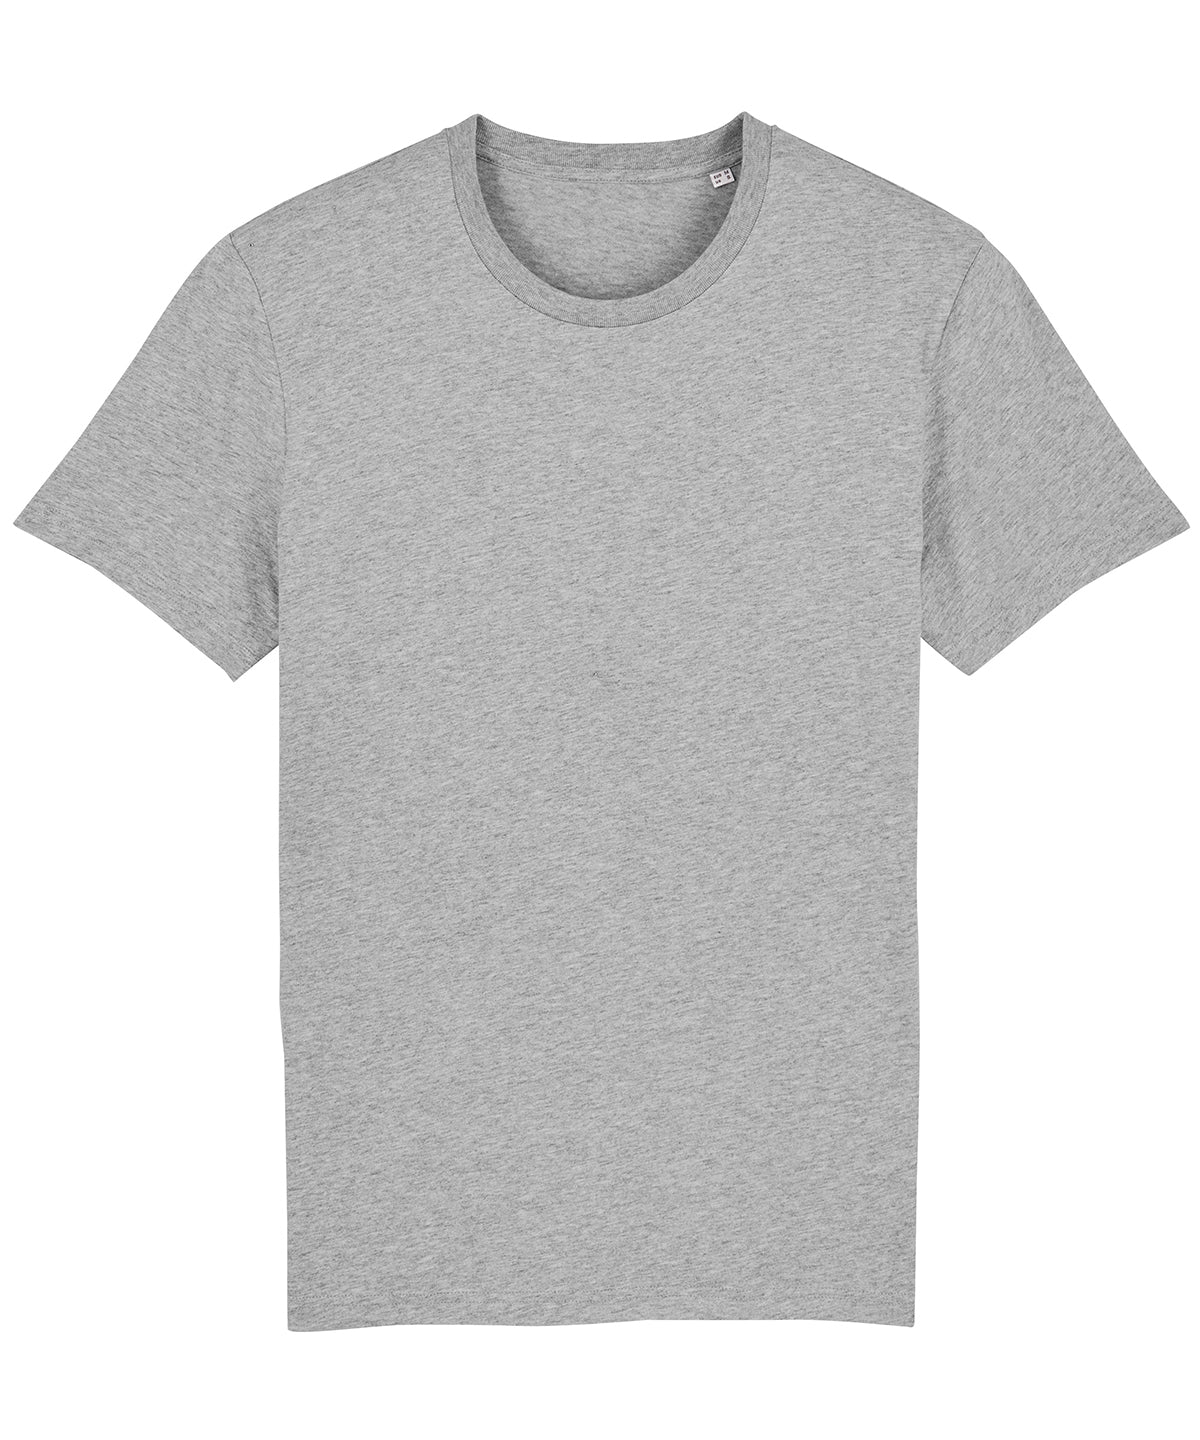 Stanley/Stella Unisex Creator Iconic T-Shirt  Heather Grey